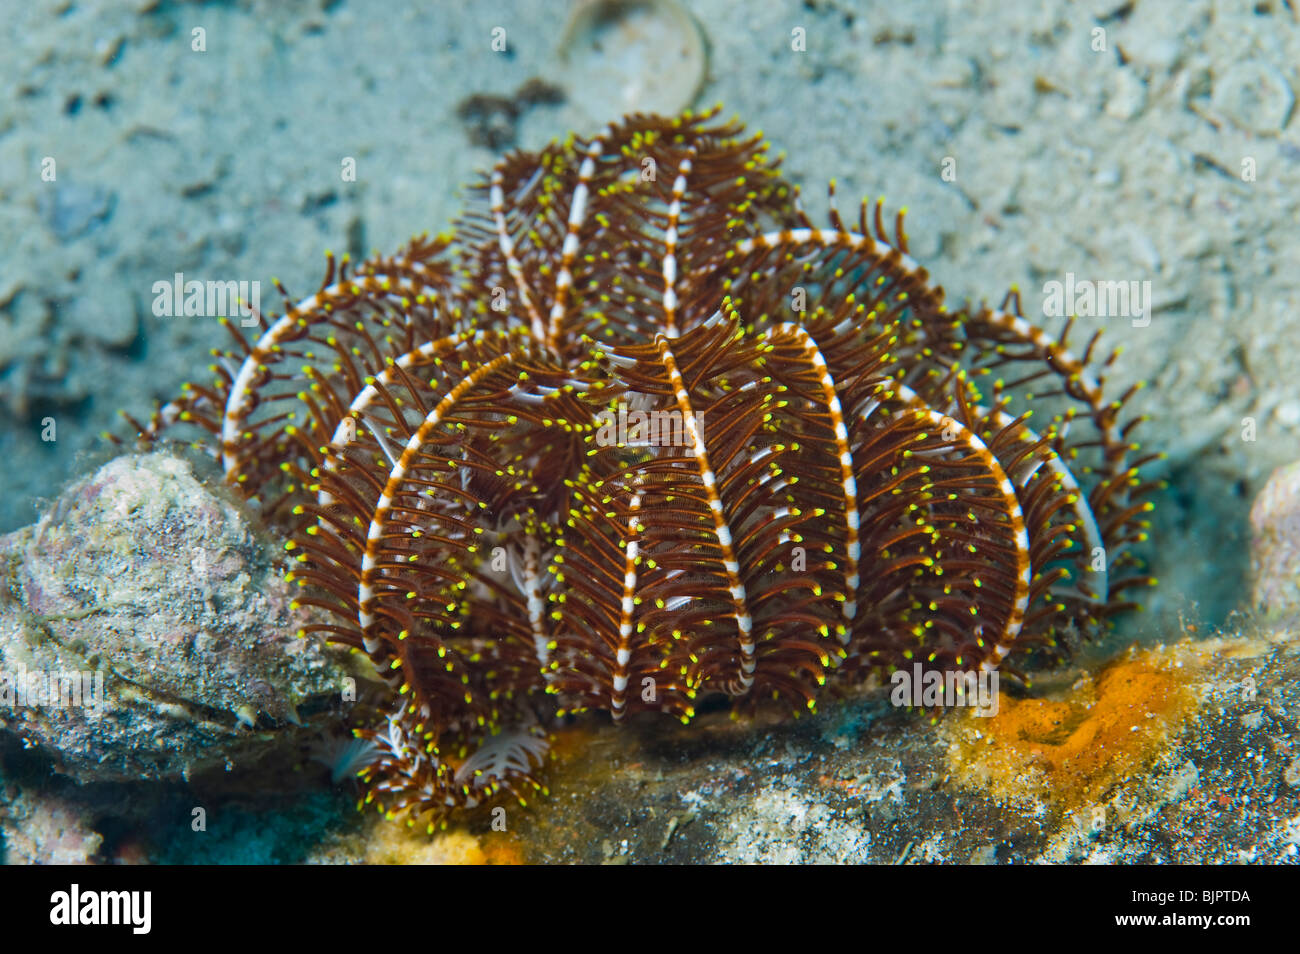 Feather star featherstar Comanthus sp sea fan crinoid reef malapascua ...